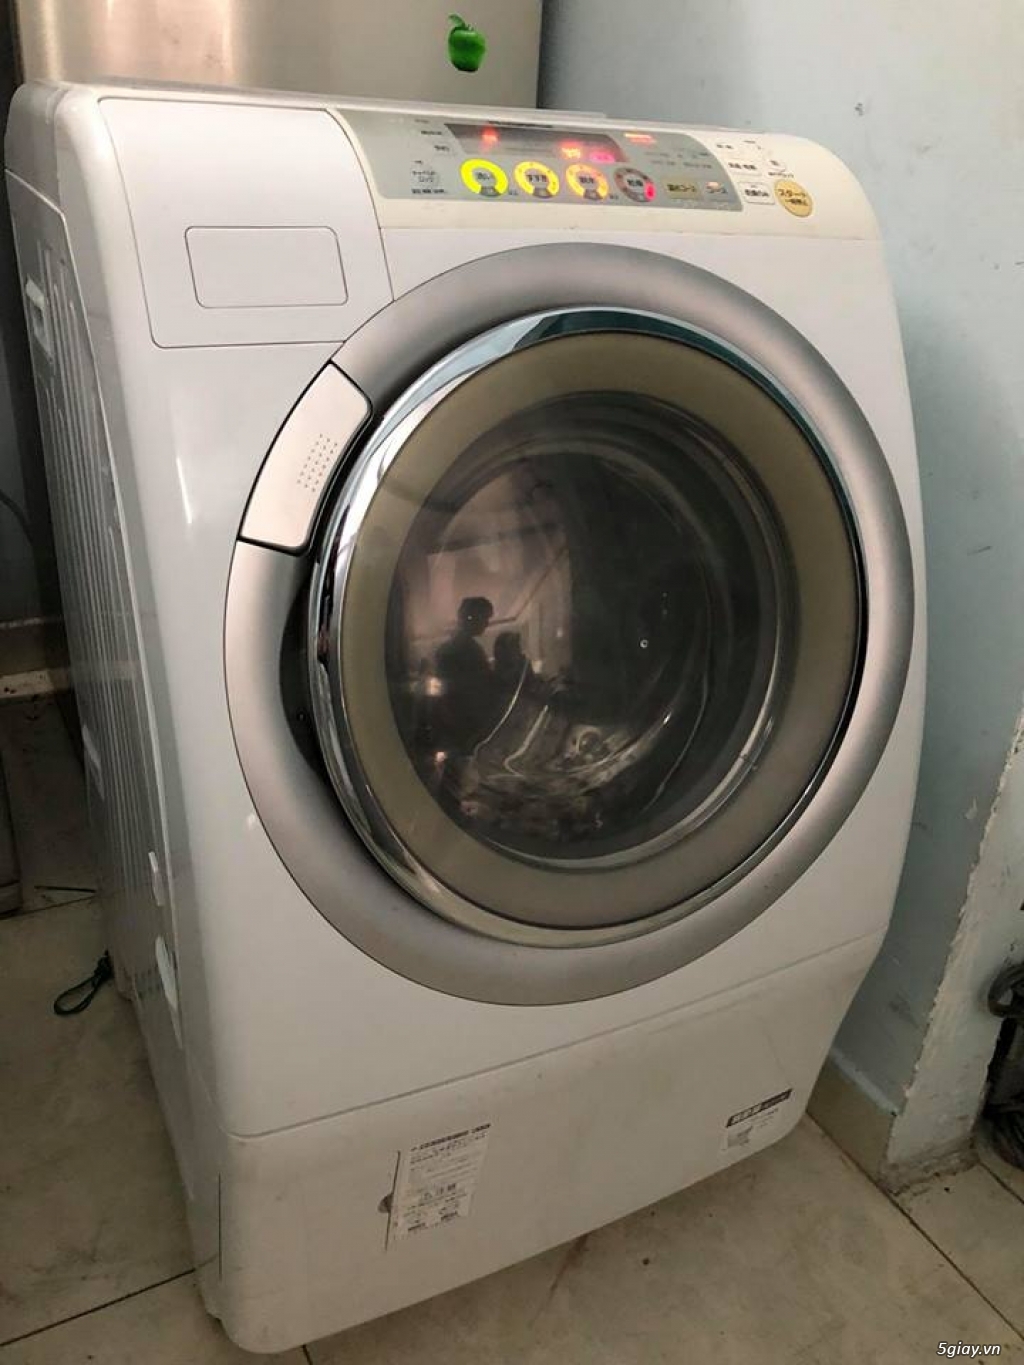 Máy giặt Panasonic, National, Toshiba kết hợp máy sấy - 15